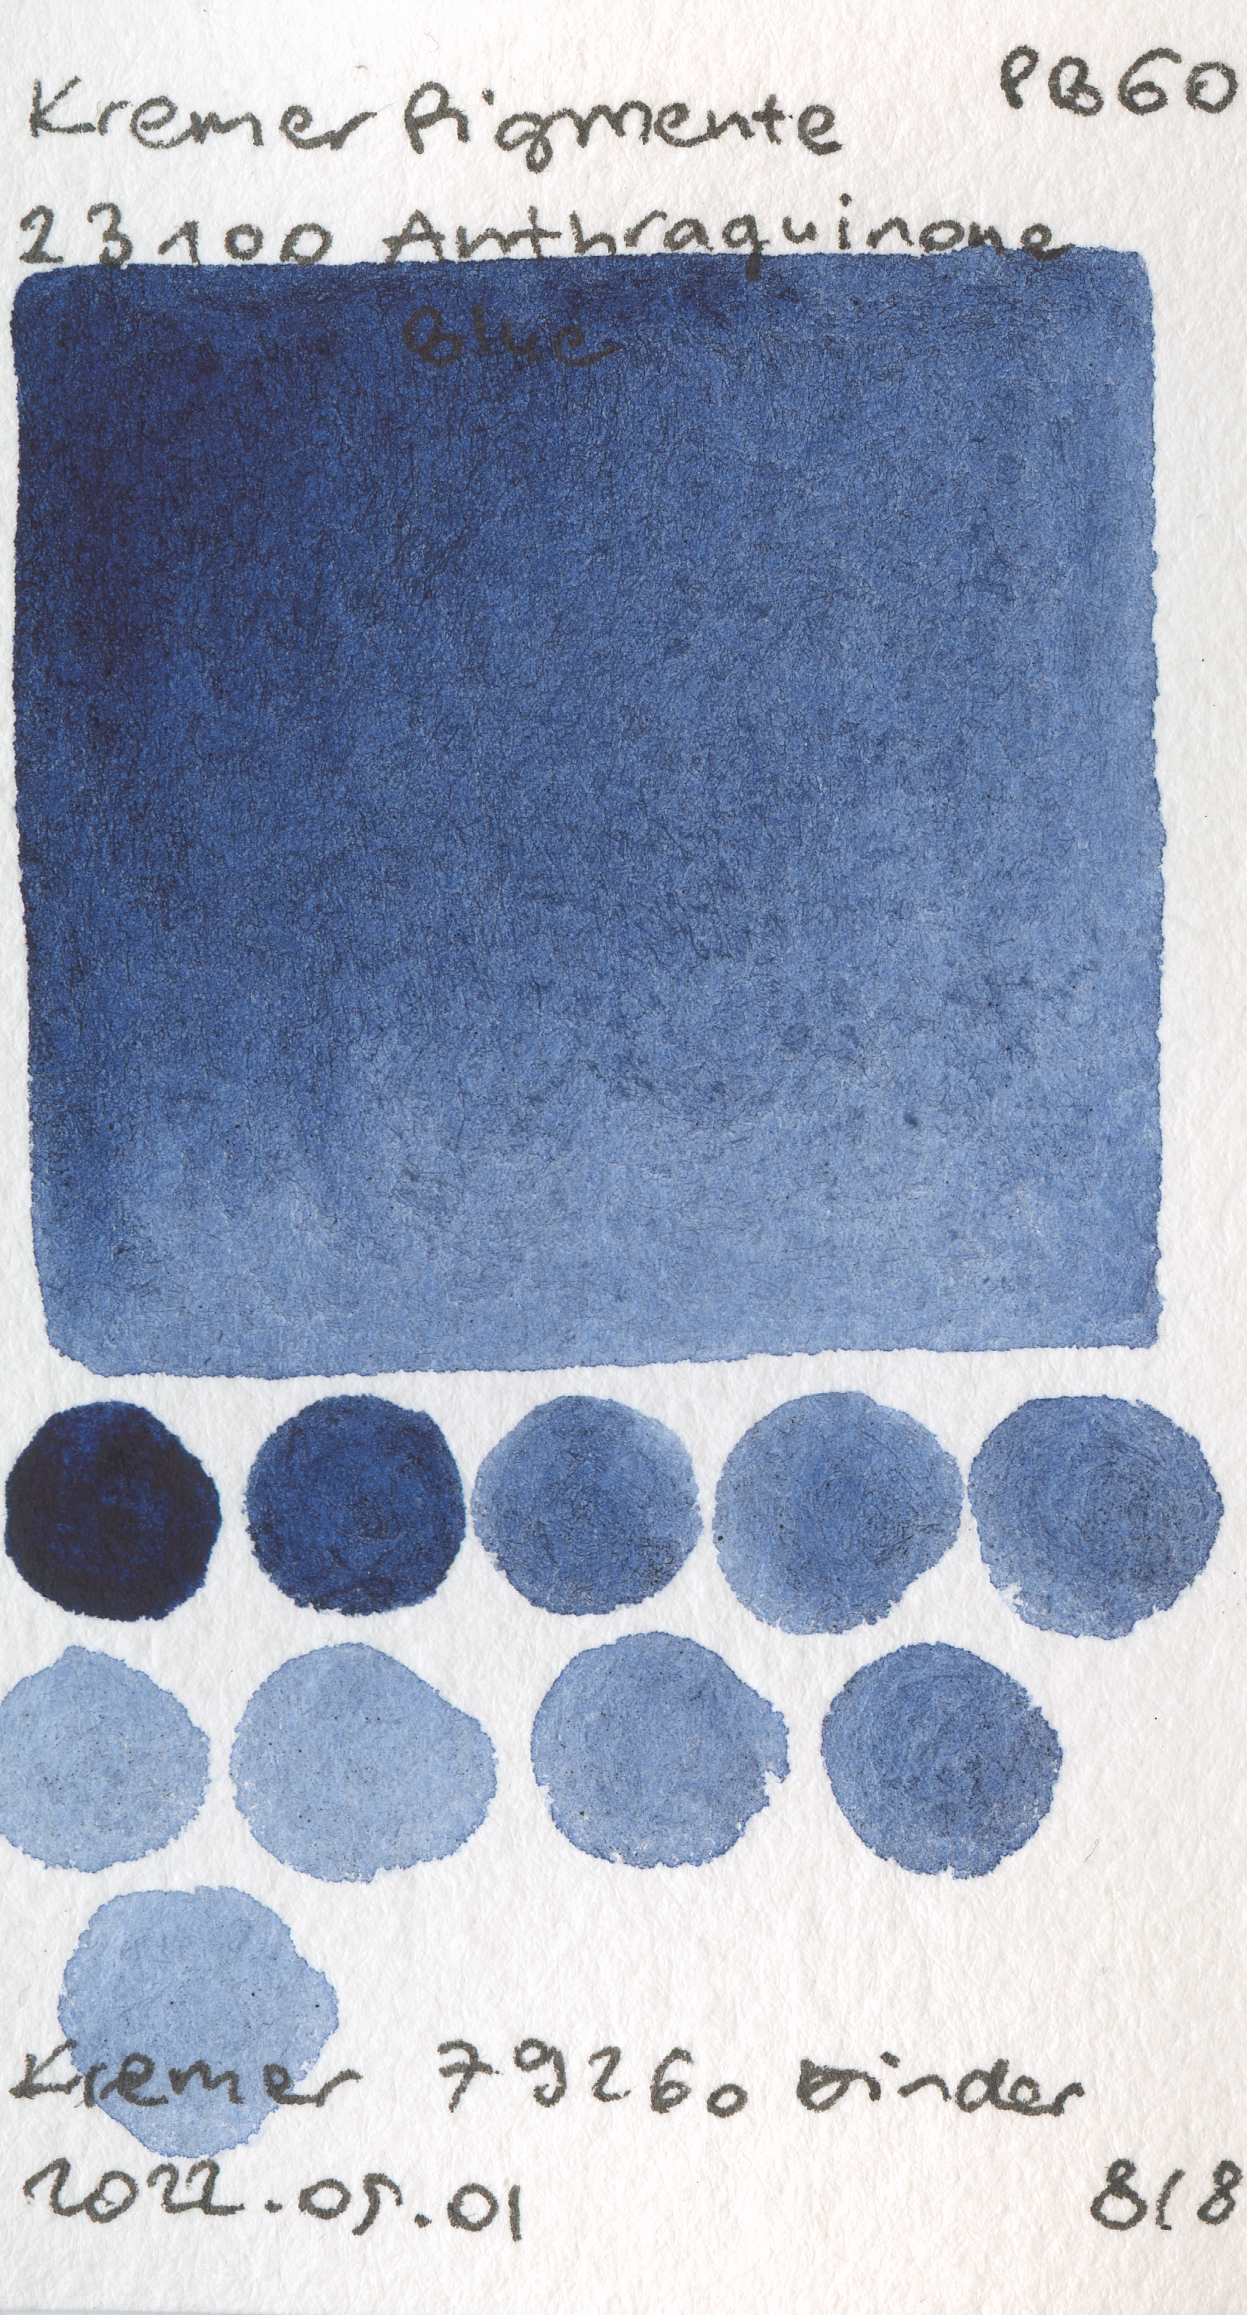 Kremer Pigmente [Dry] Pigments 23100 Anthraquinone Blue PB60 watercolor swatch